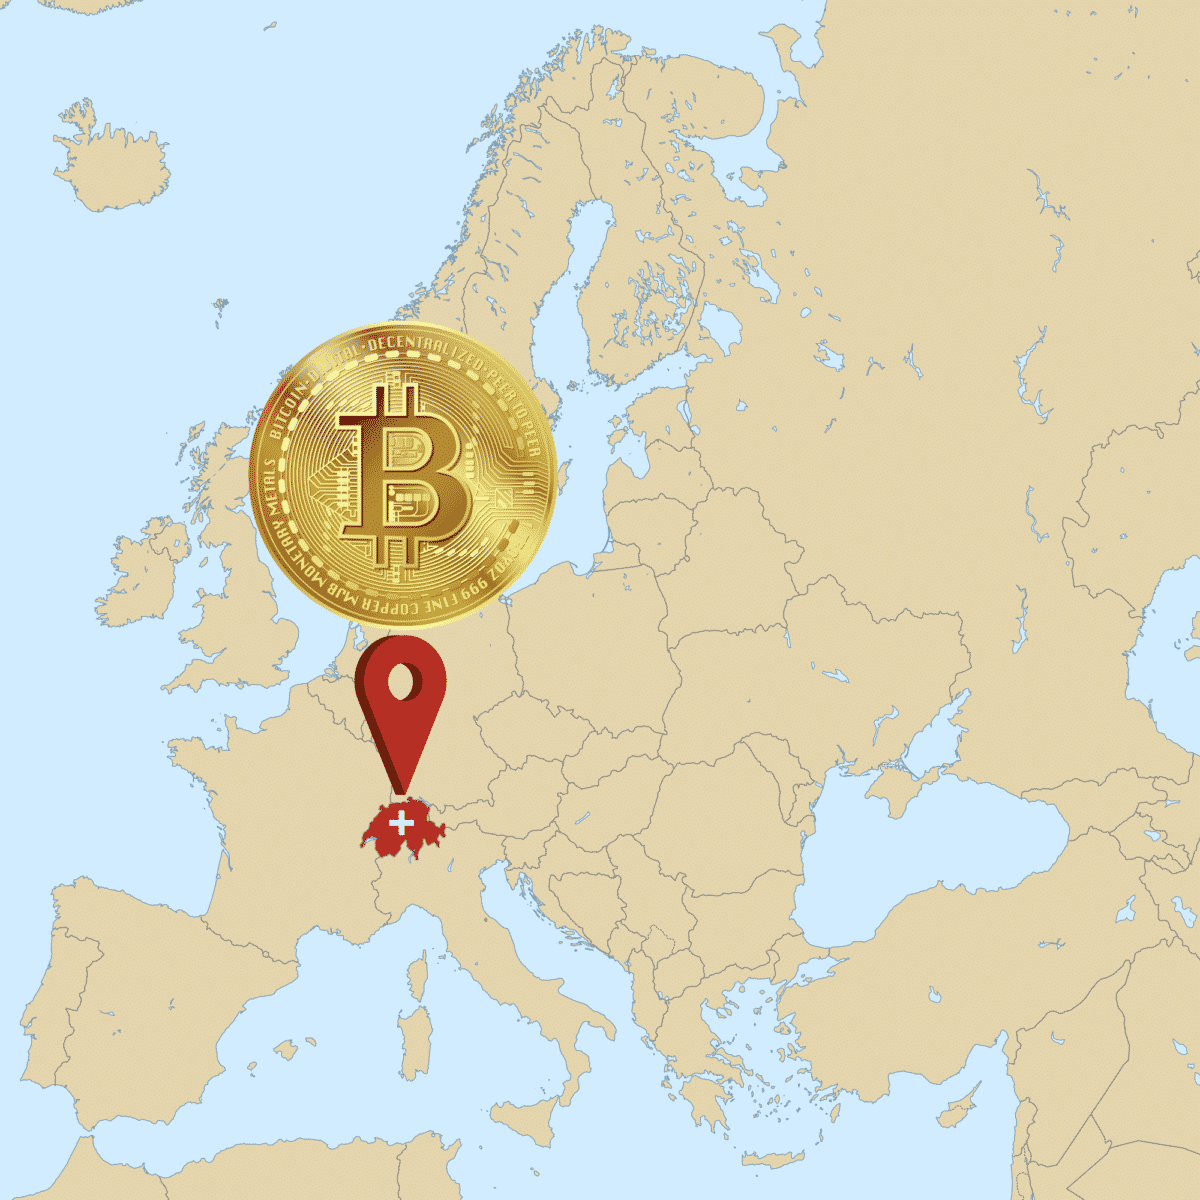 Lugano, A Swiss City, Declares Bitcoin As Legal Tender